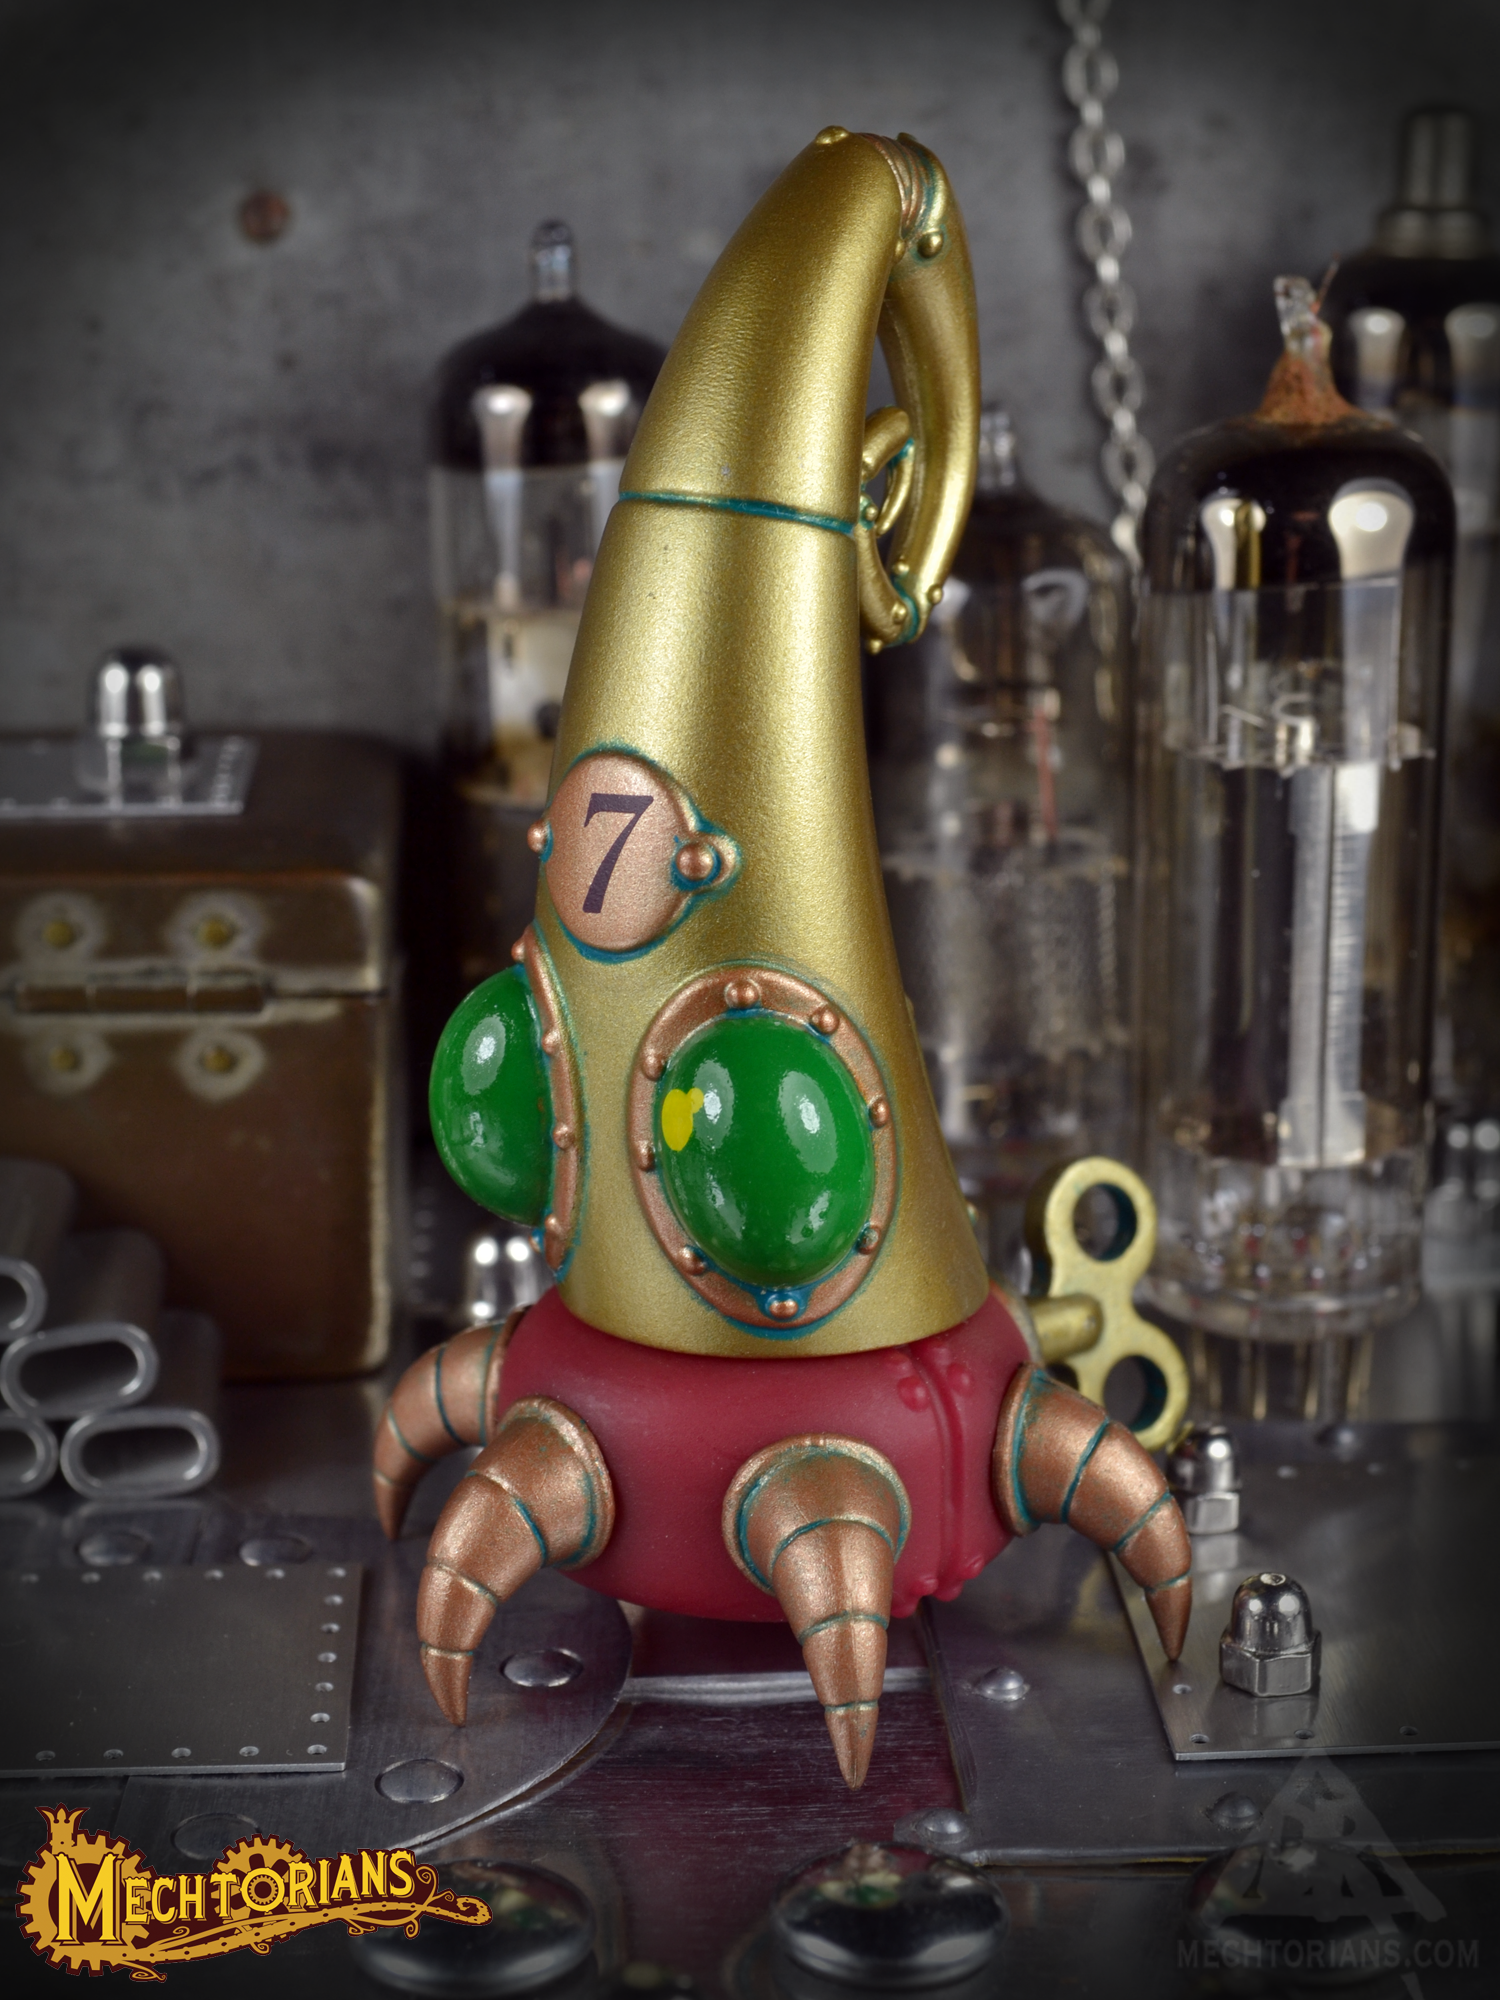 Doktor A's Mini Mechtorians vinyl figure Series 2 with Kidrobot. Crew